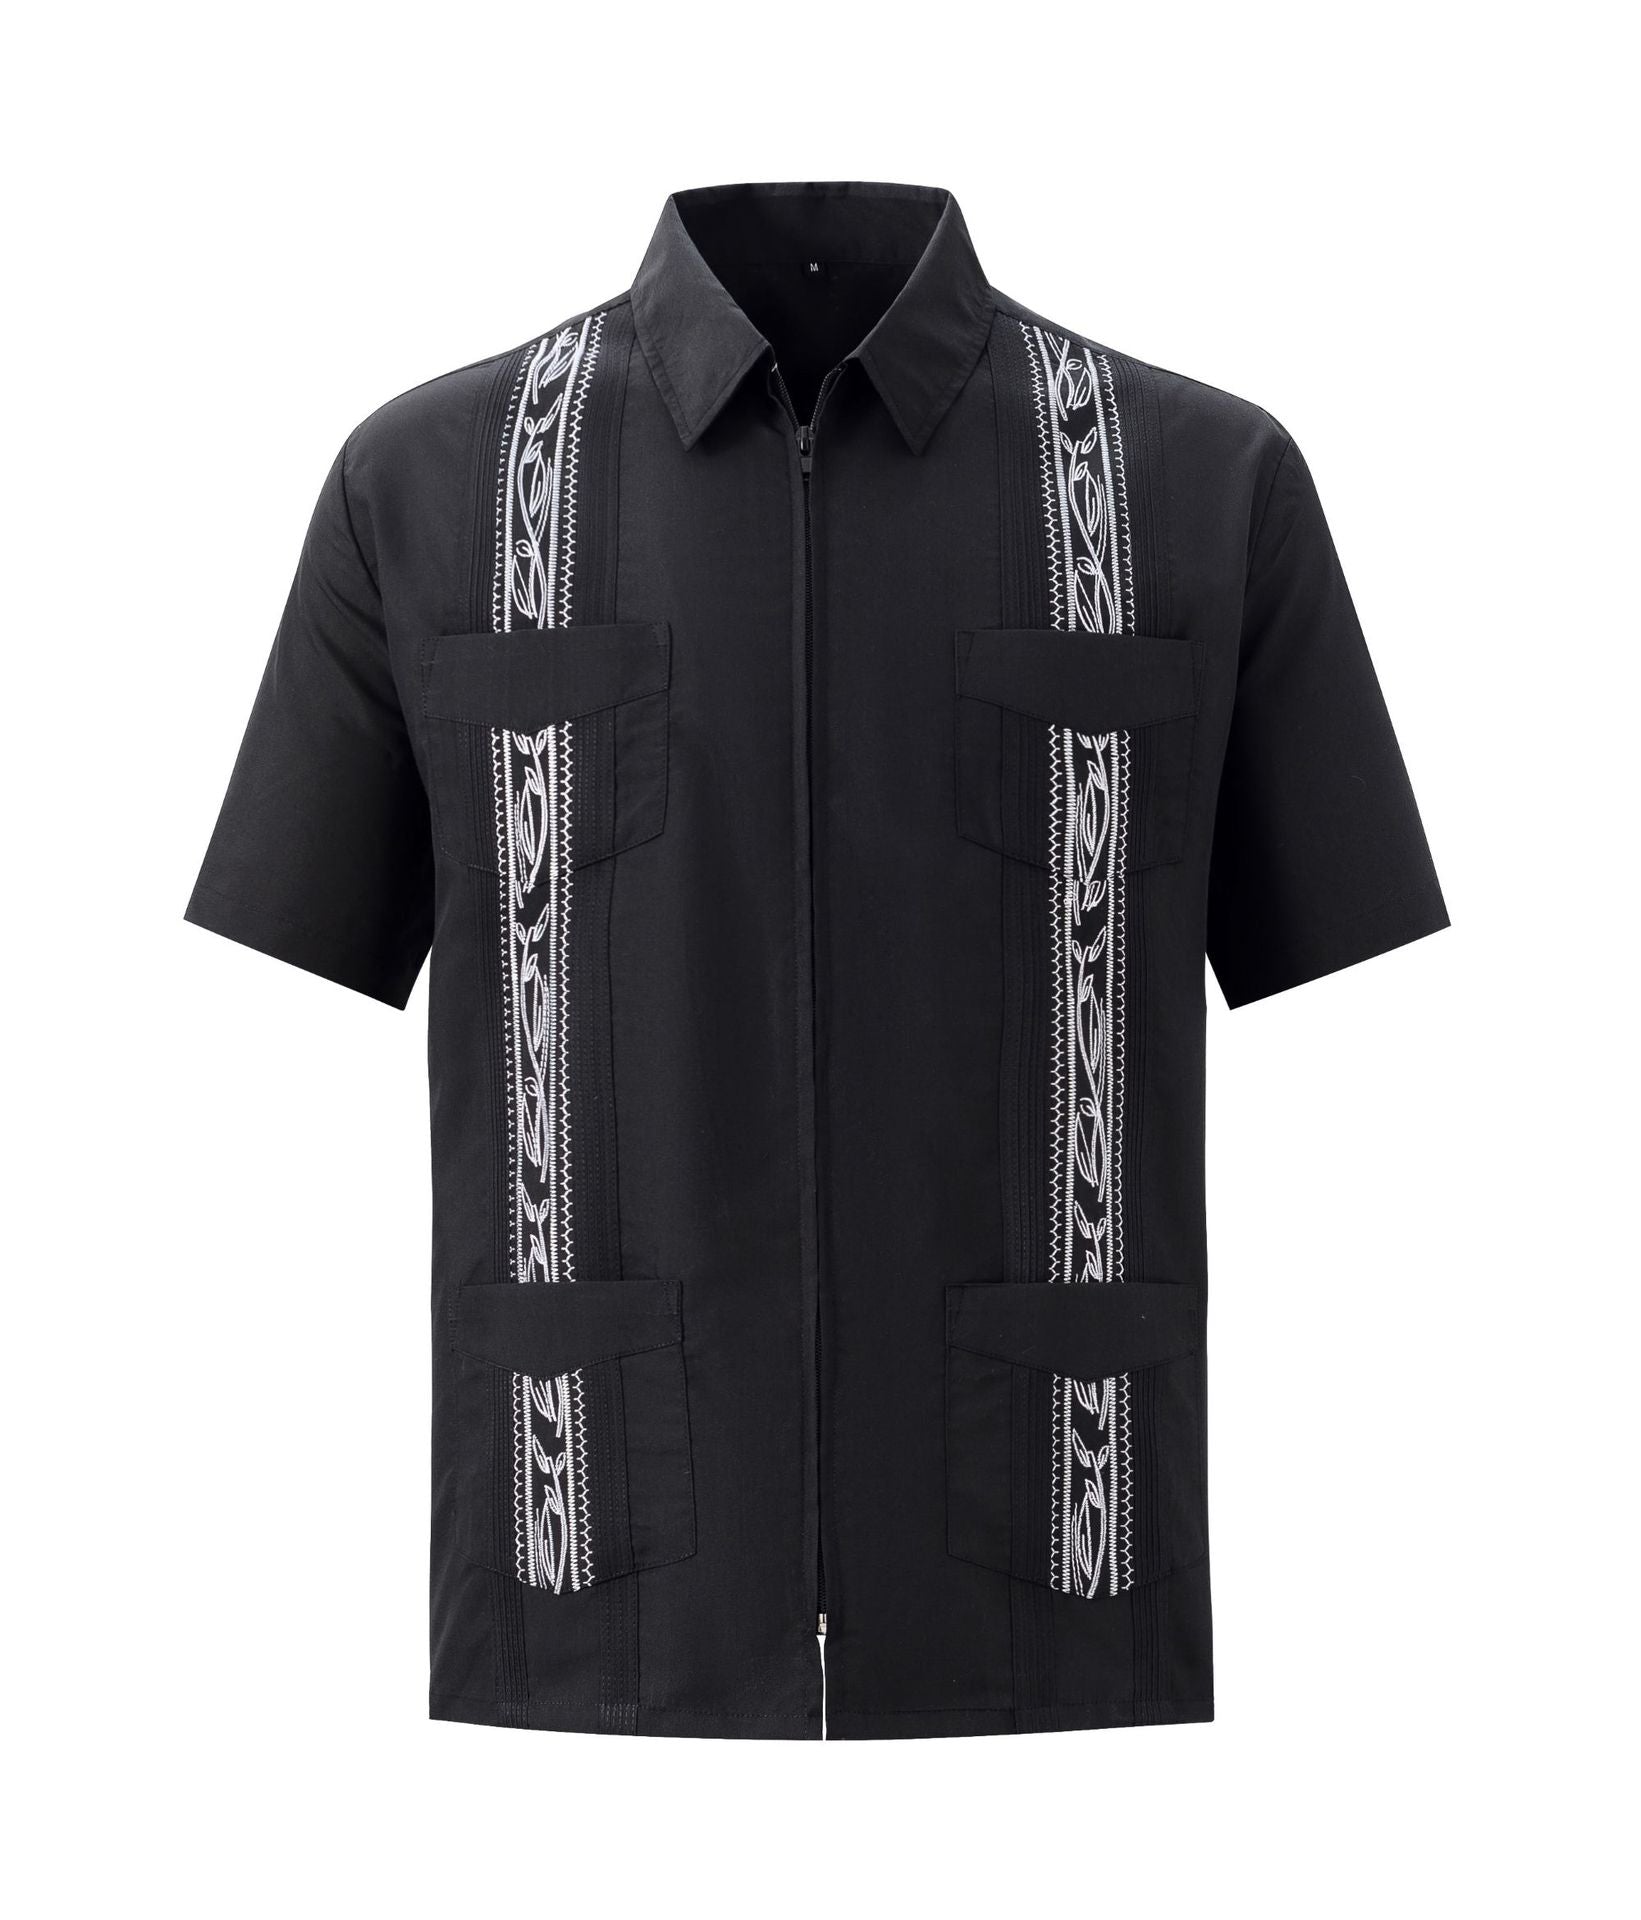 Four Pocket Embroidered Zipper Shirt for Men